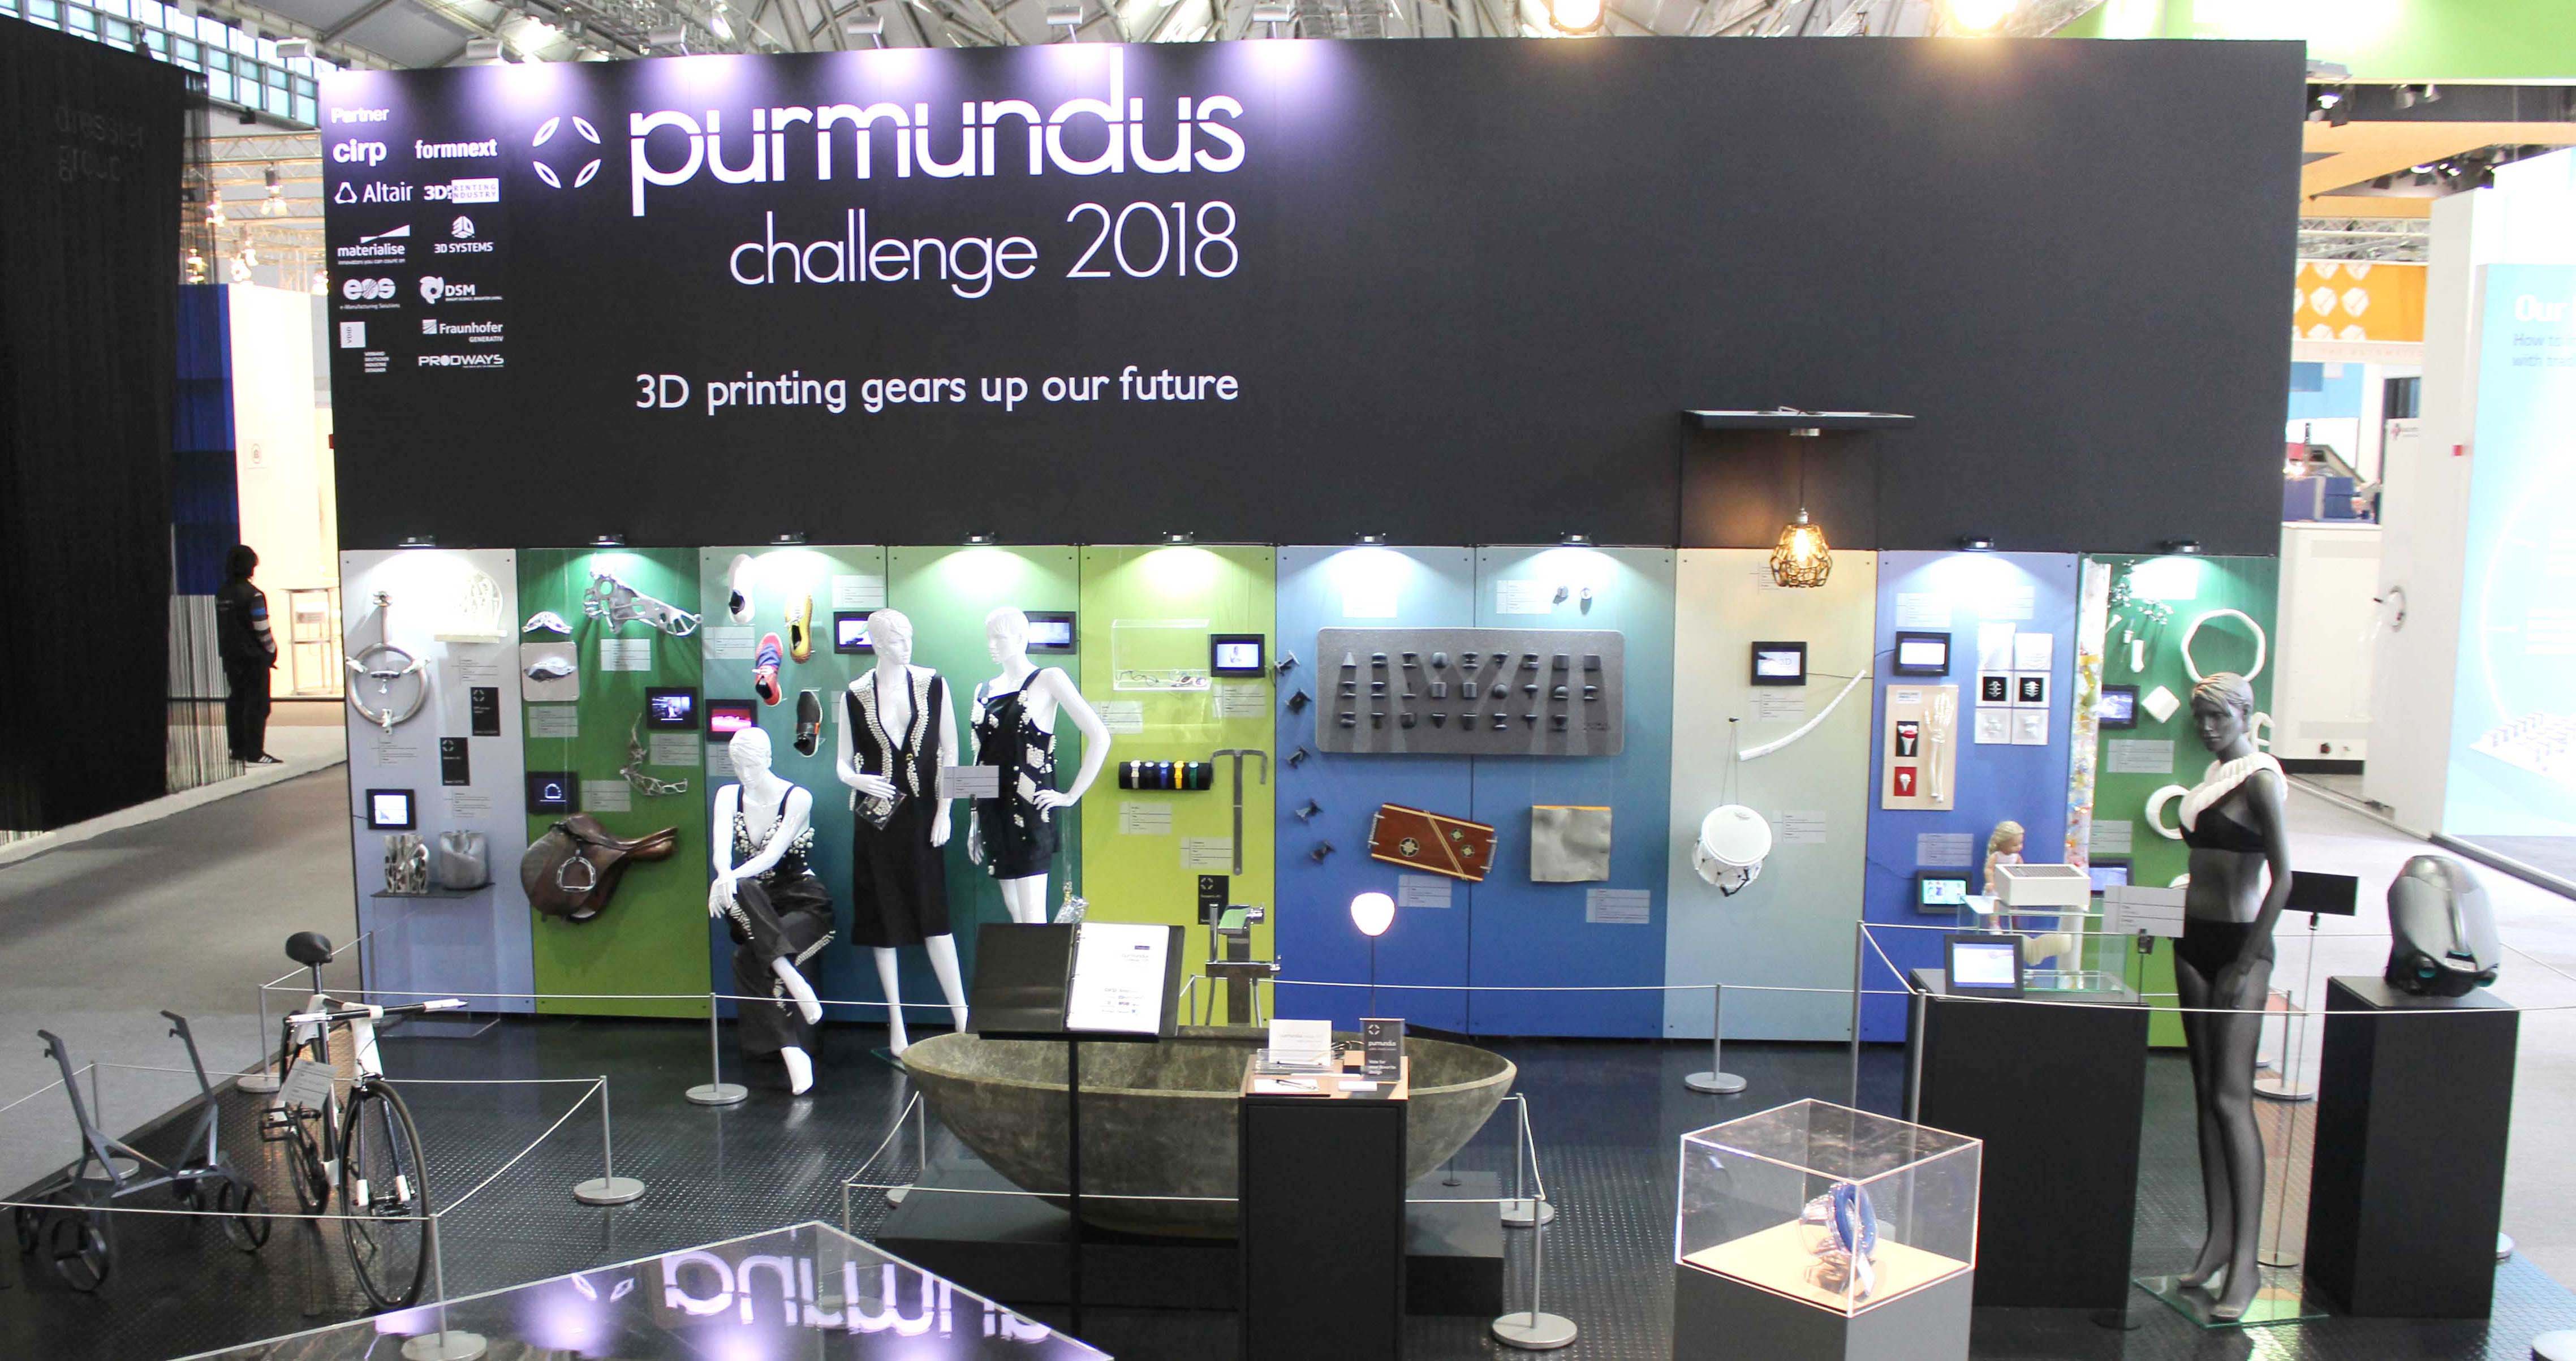 Purmundus Challenge 2018 at Formnext. Photo via Purmundus Challenge 